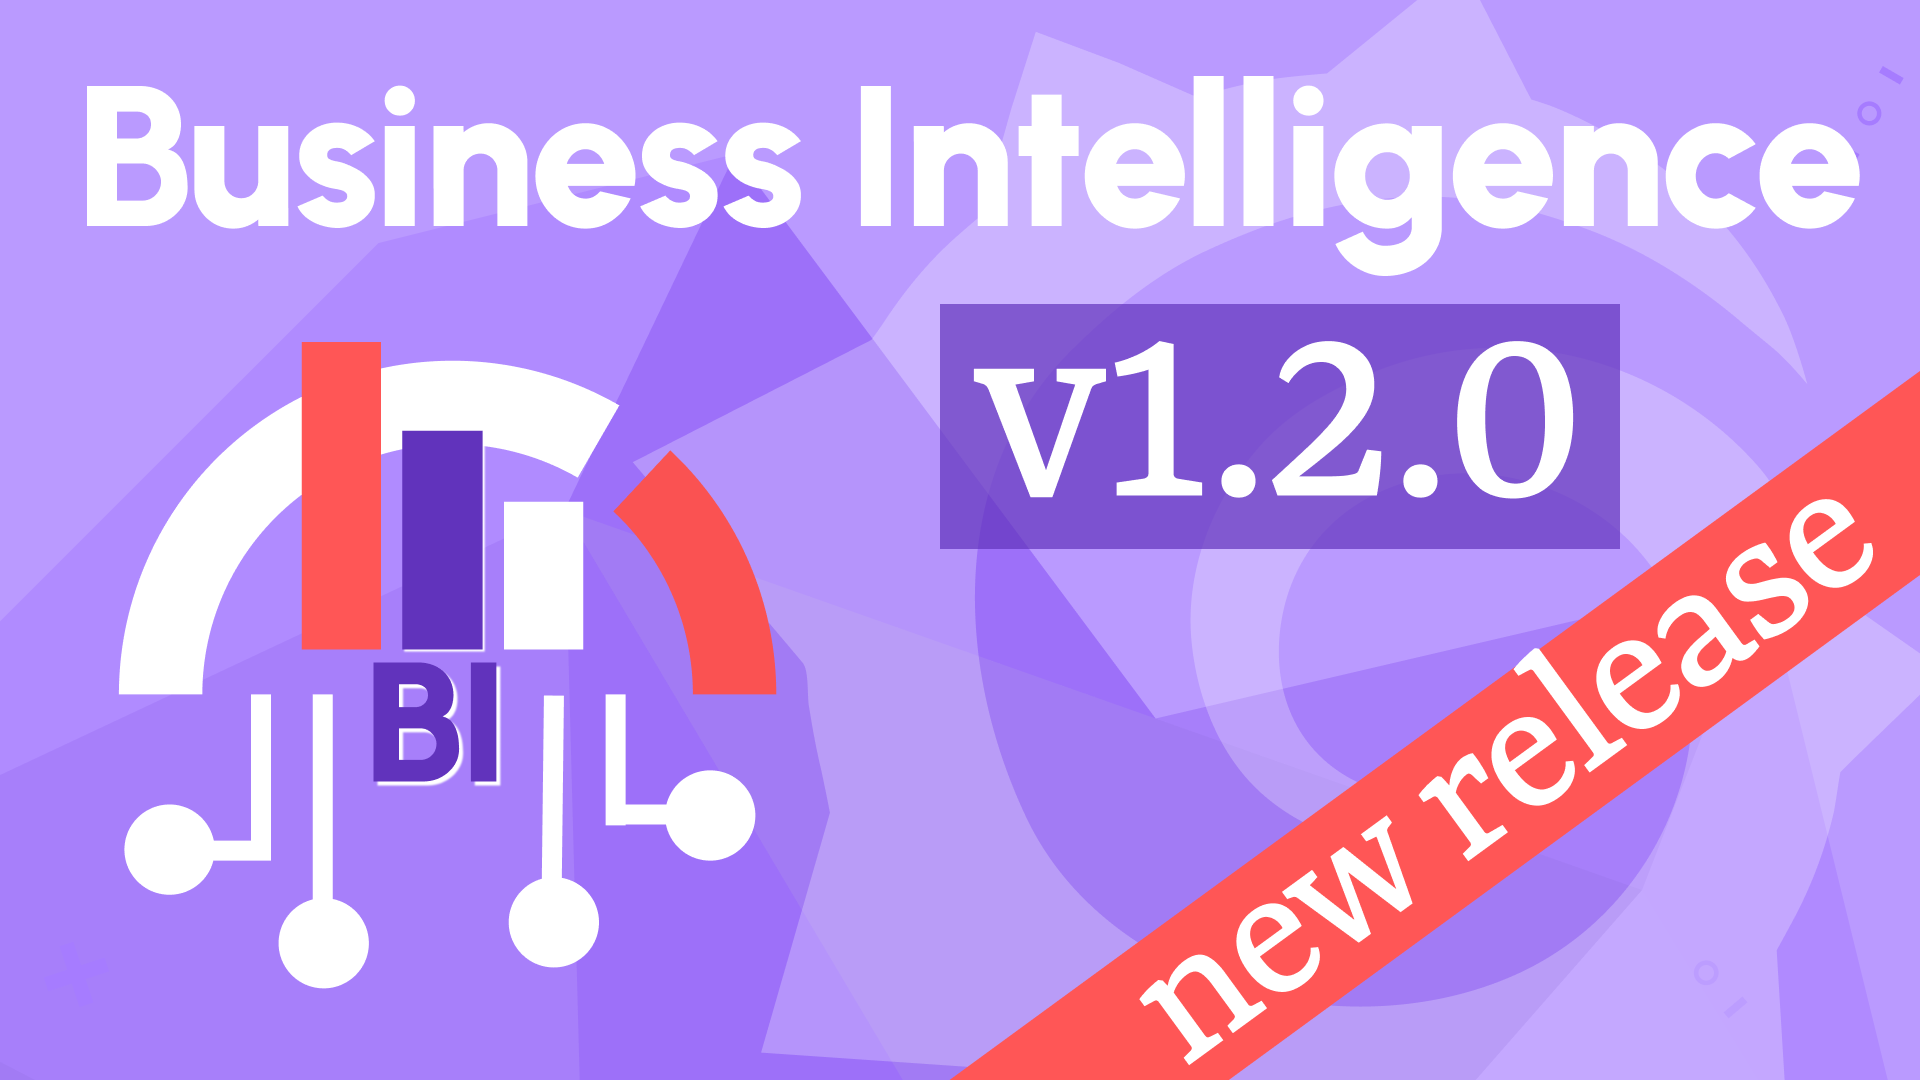 Business Intelligence App 1.2.0